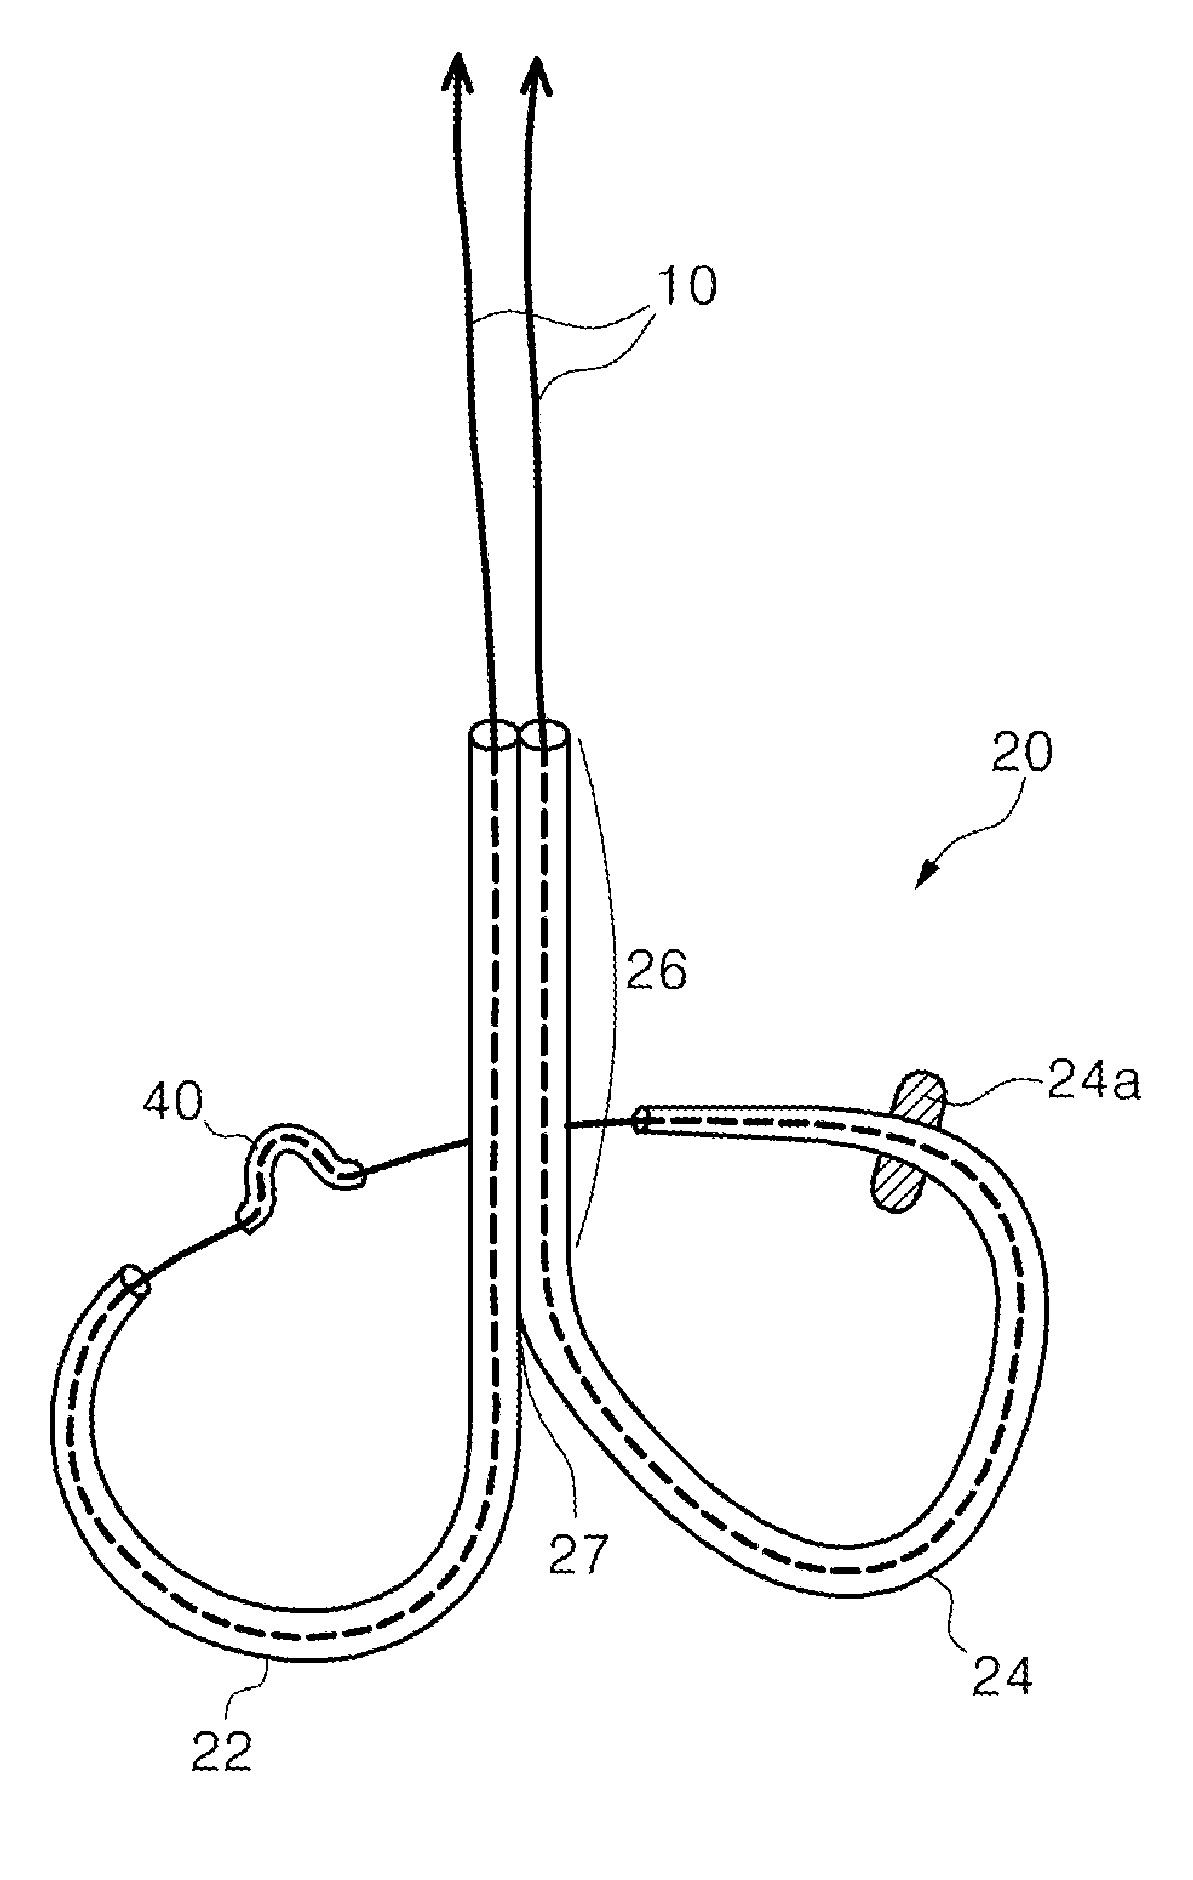 Mitral cerclage annuloplasty apparatus